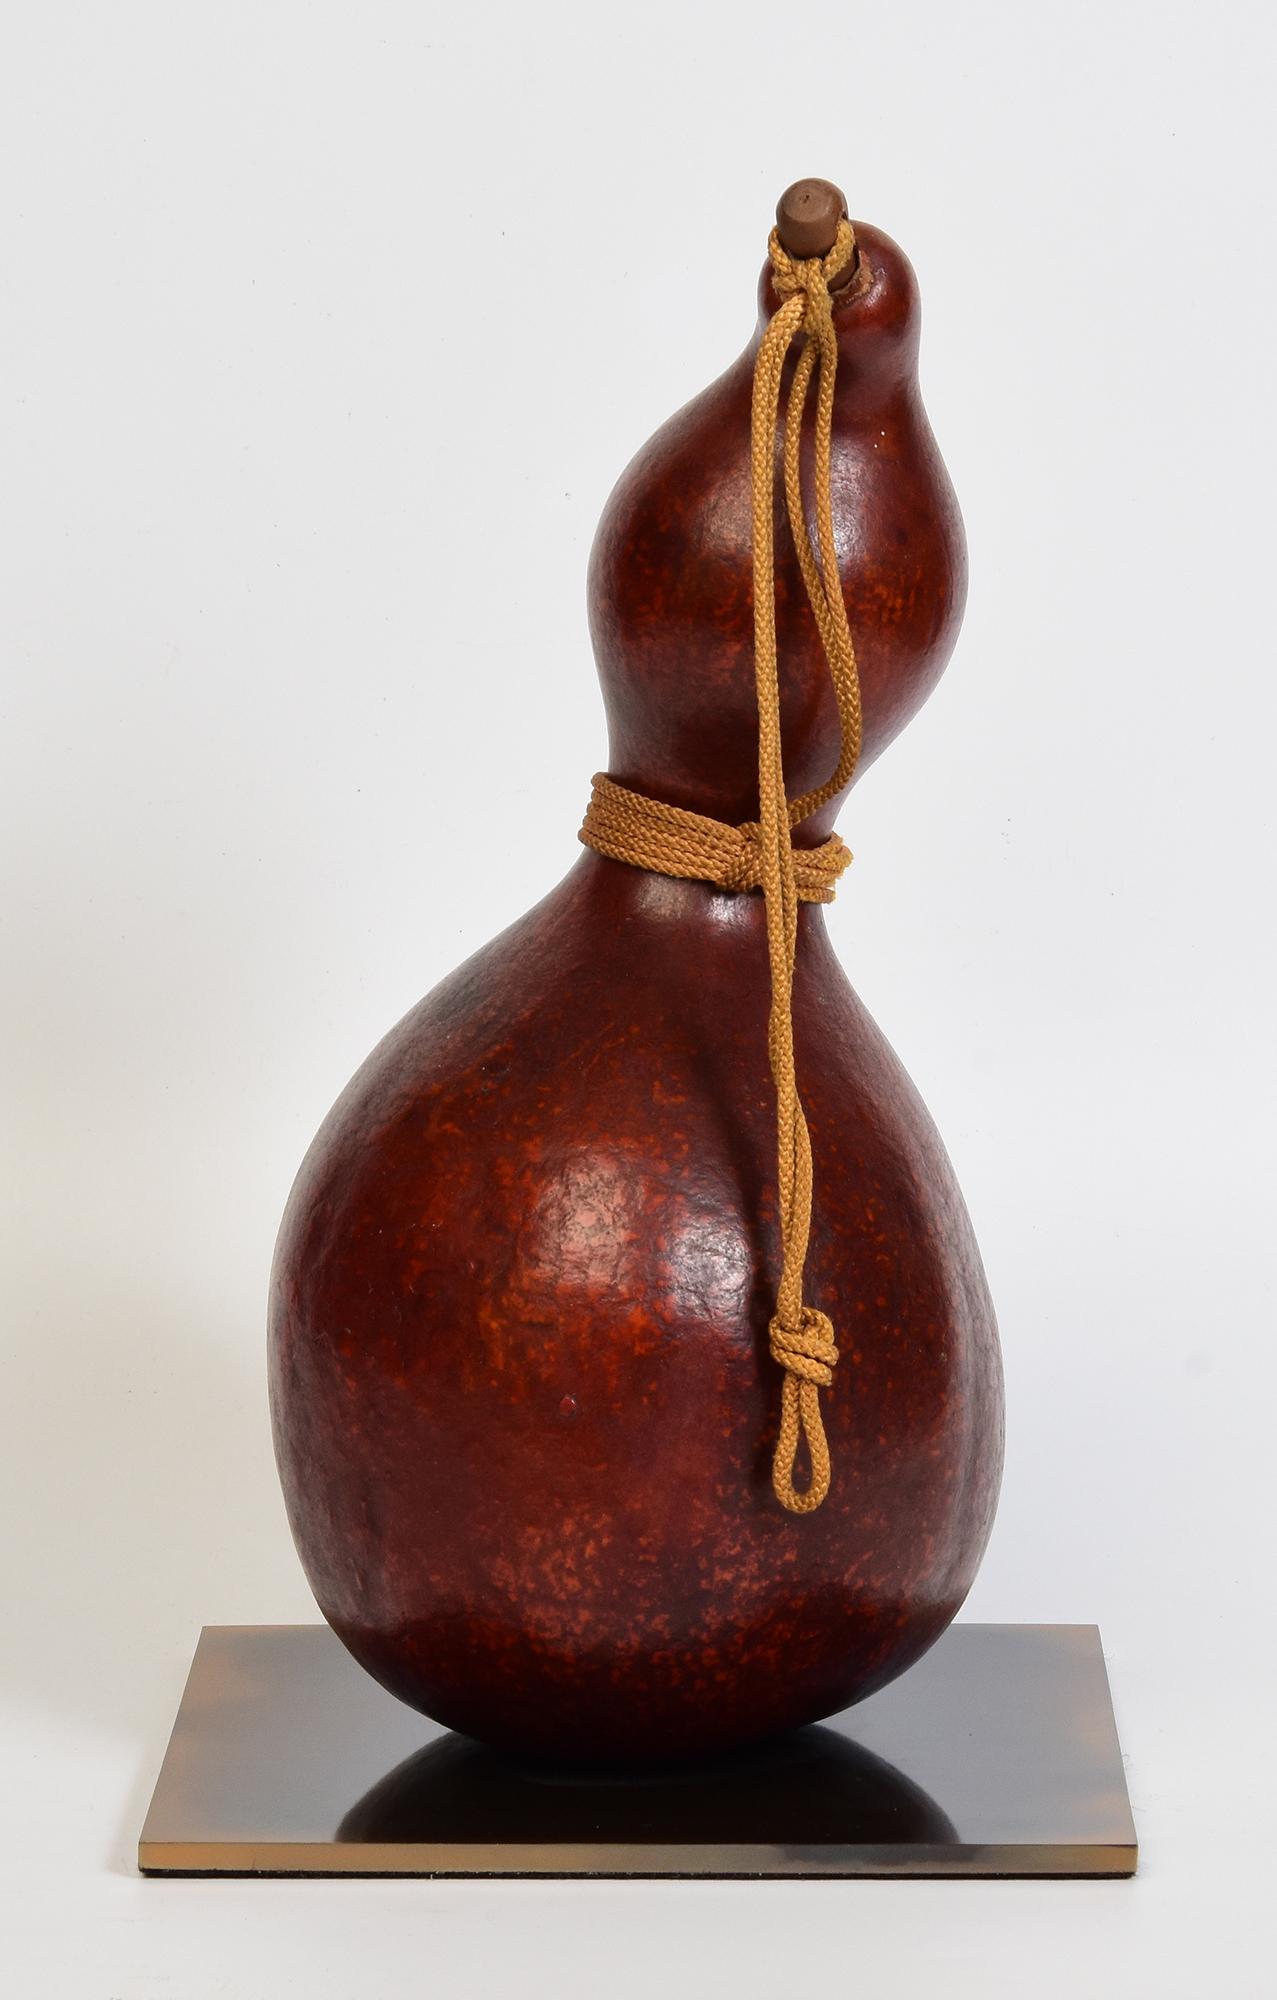 Japanese Antique Samurai Wine / Sake Gourd “Hyotan” Lacquered Calabash Flask For Sale 2